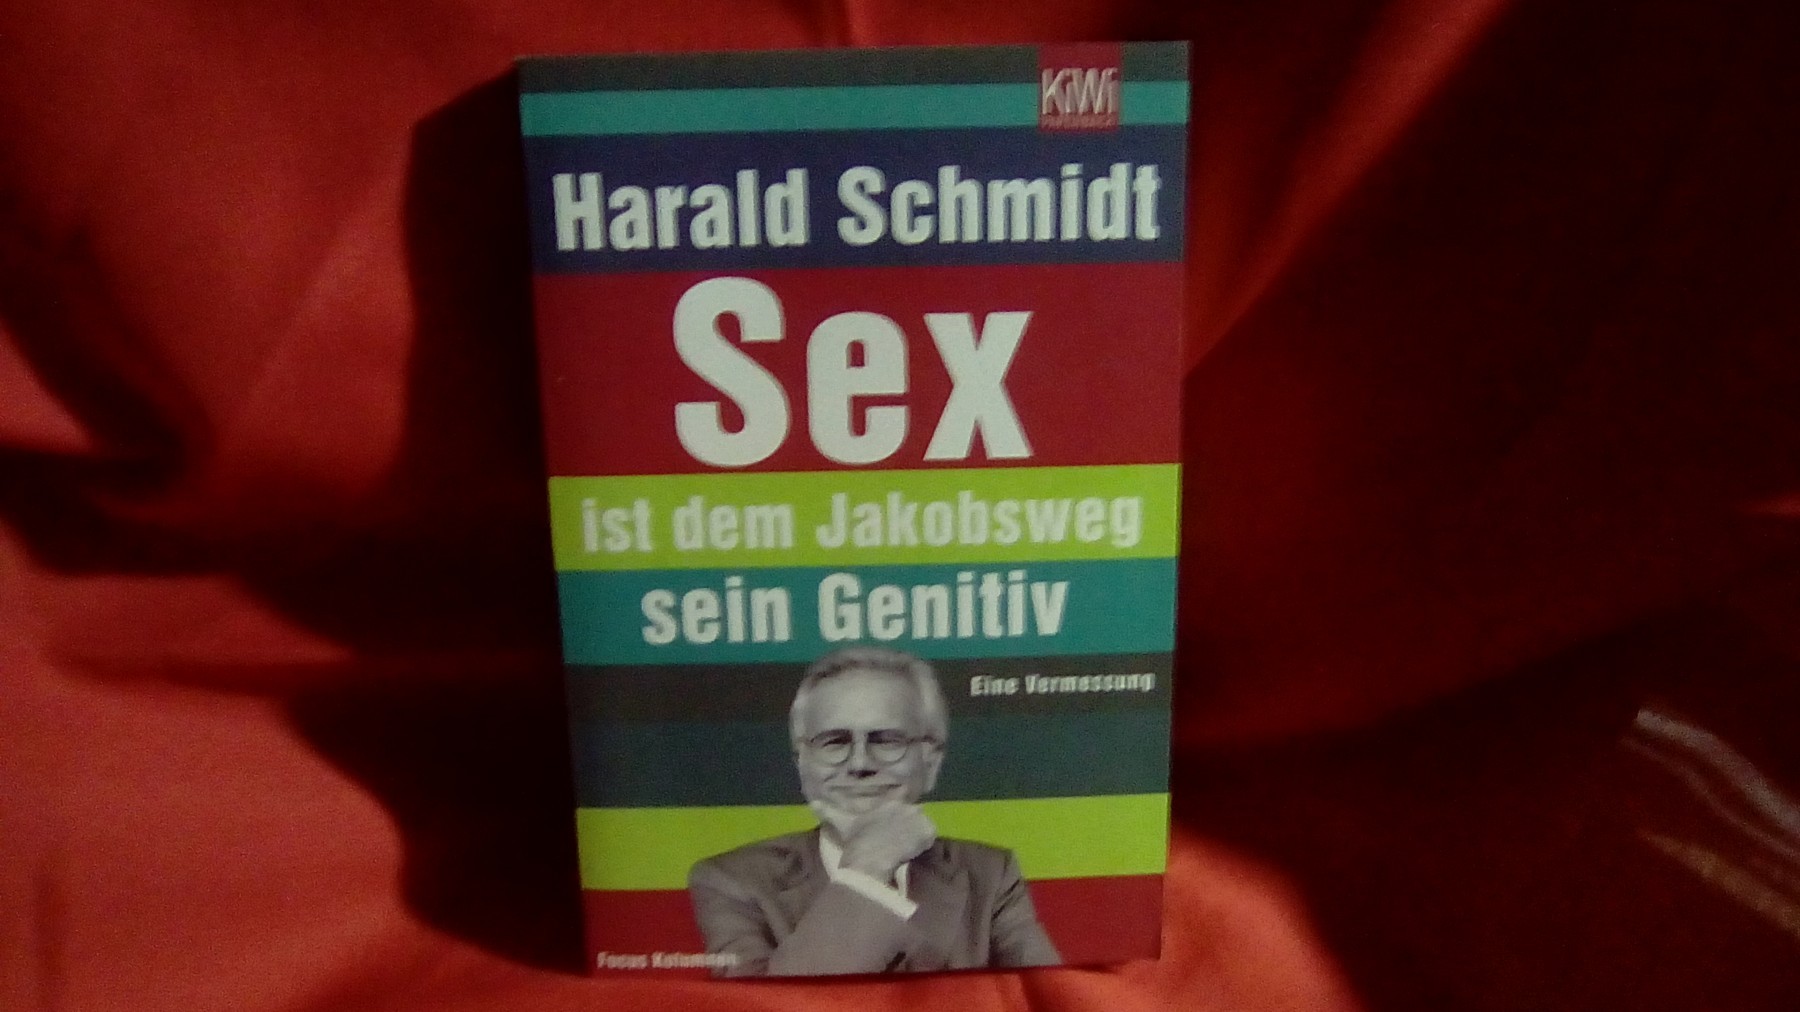 Sex jakobsweg Kitsambler's Journeys